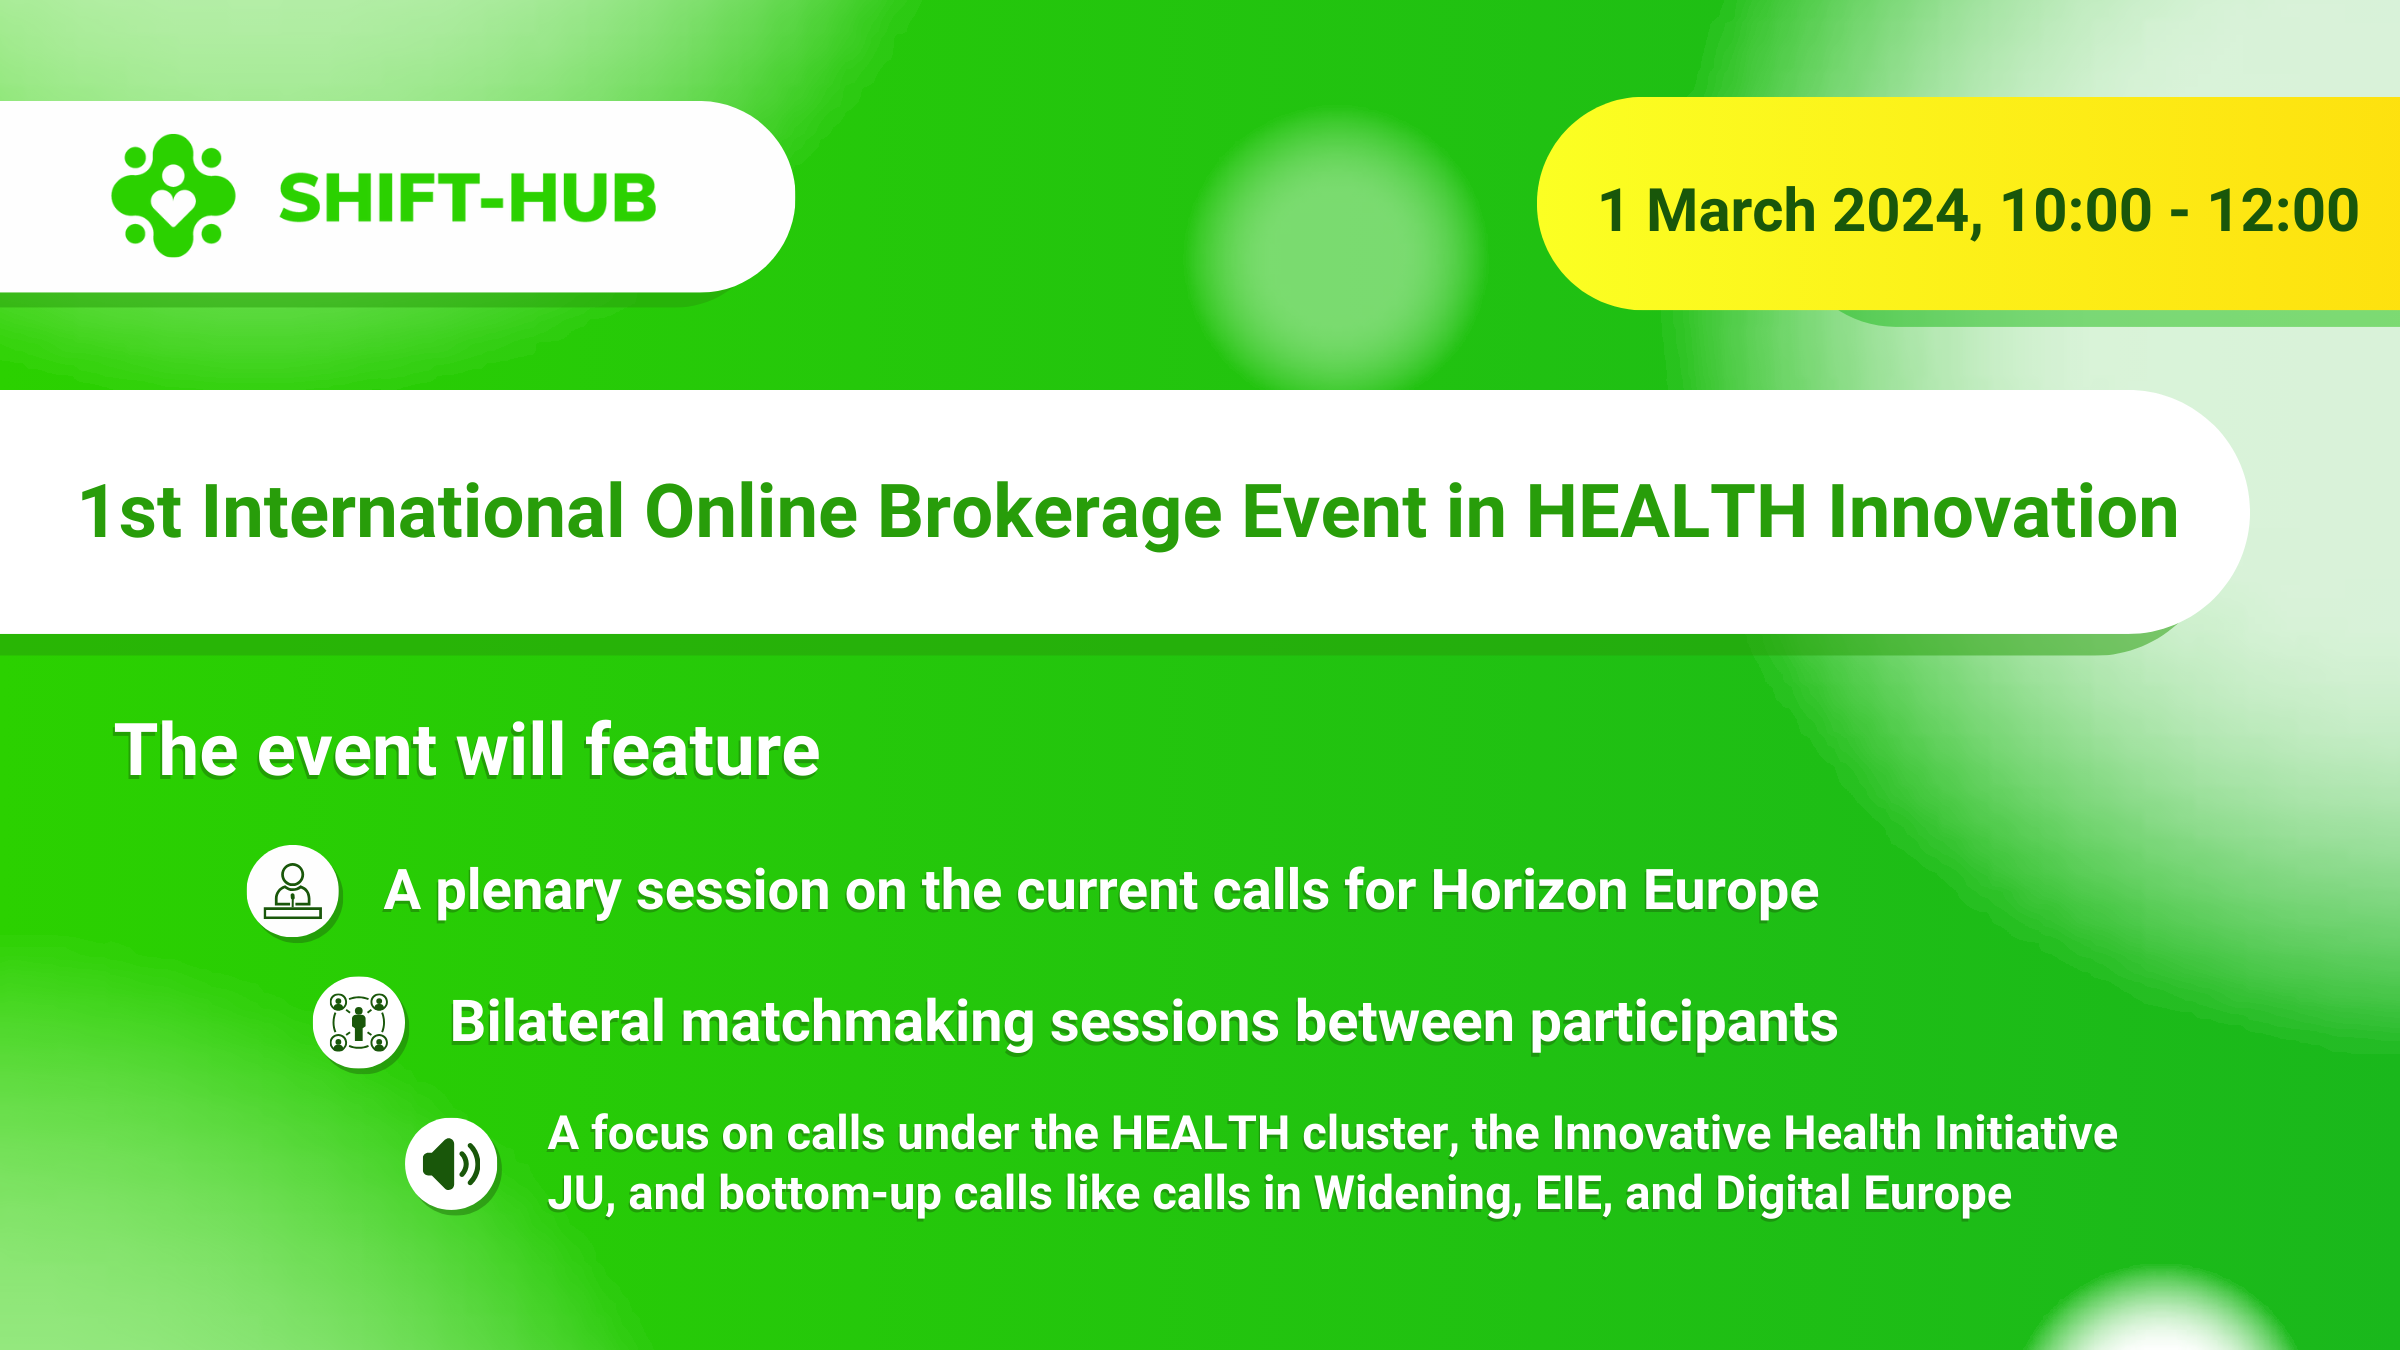 Banner for 1st International Online Brokerage Event in Health Innovation Shift-Hub